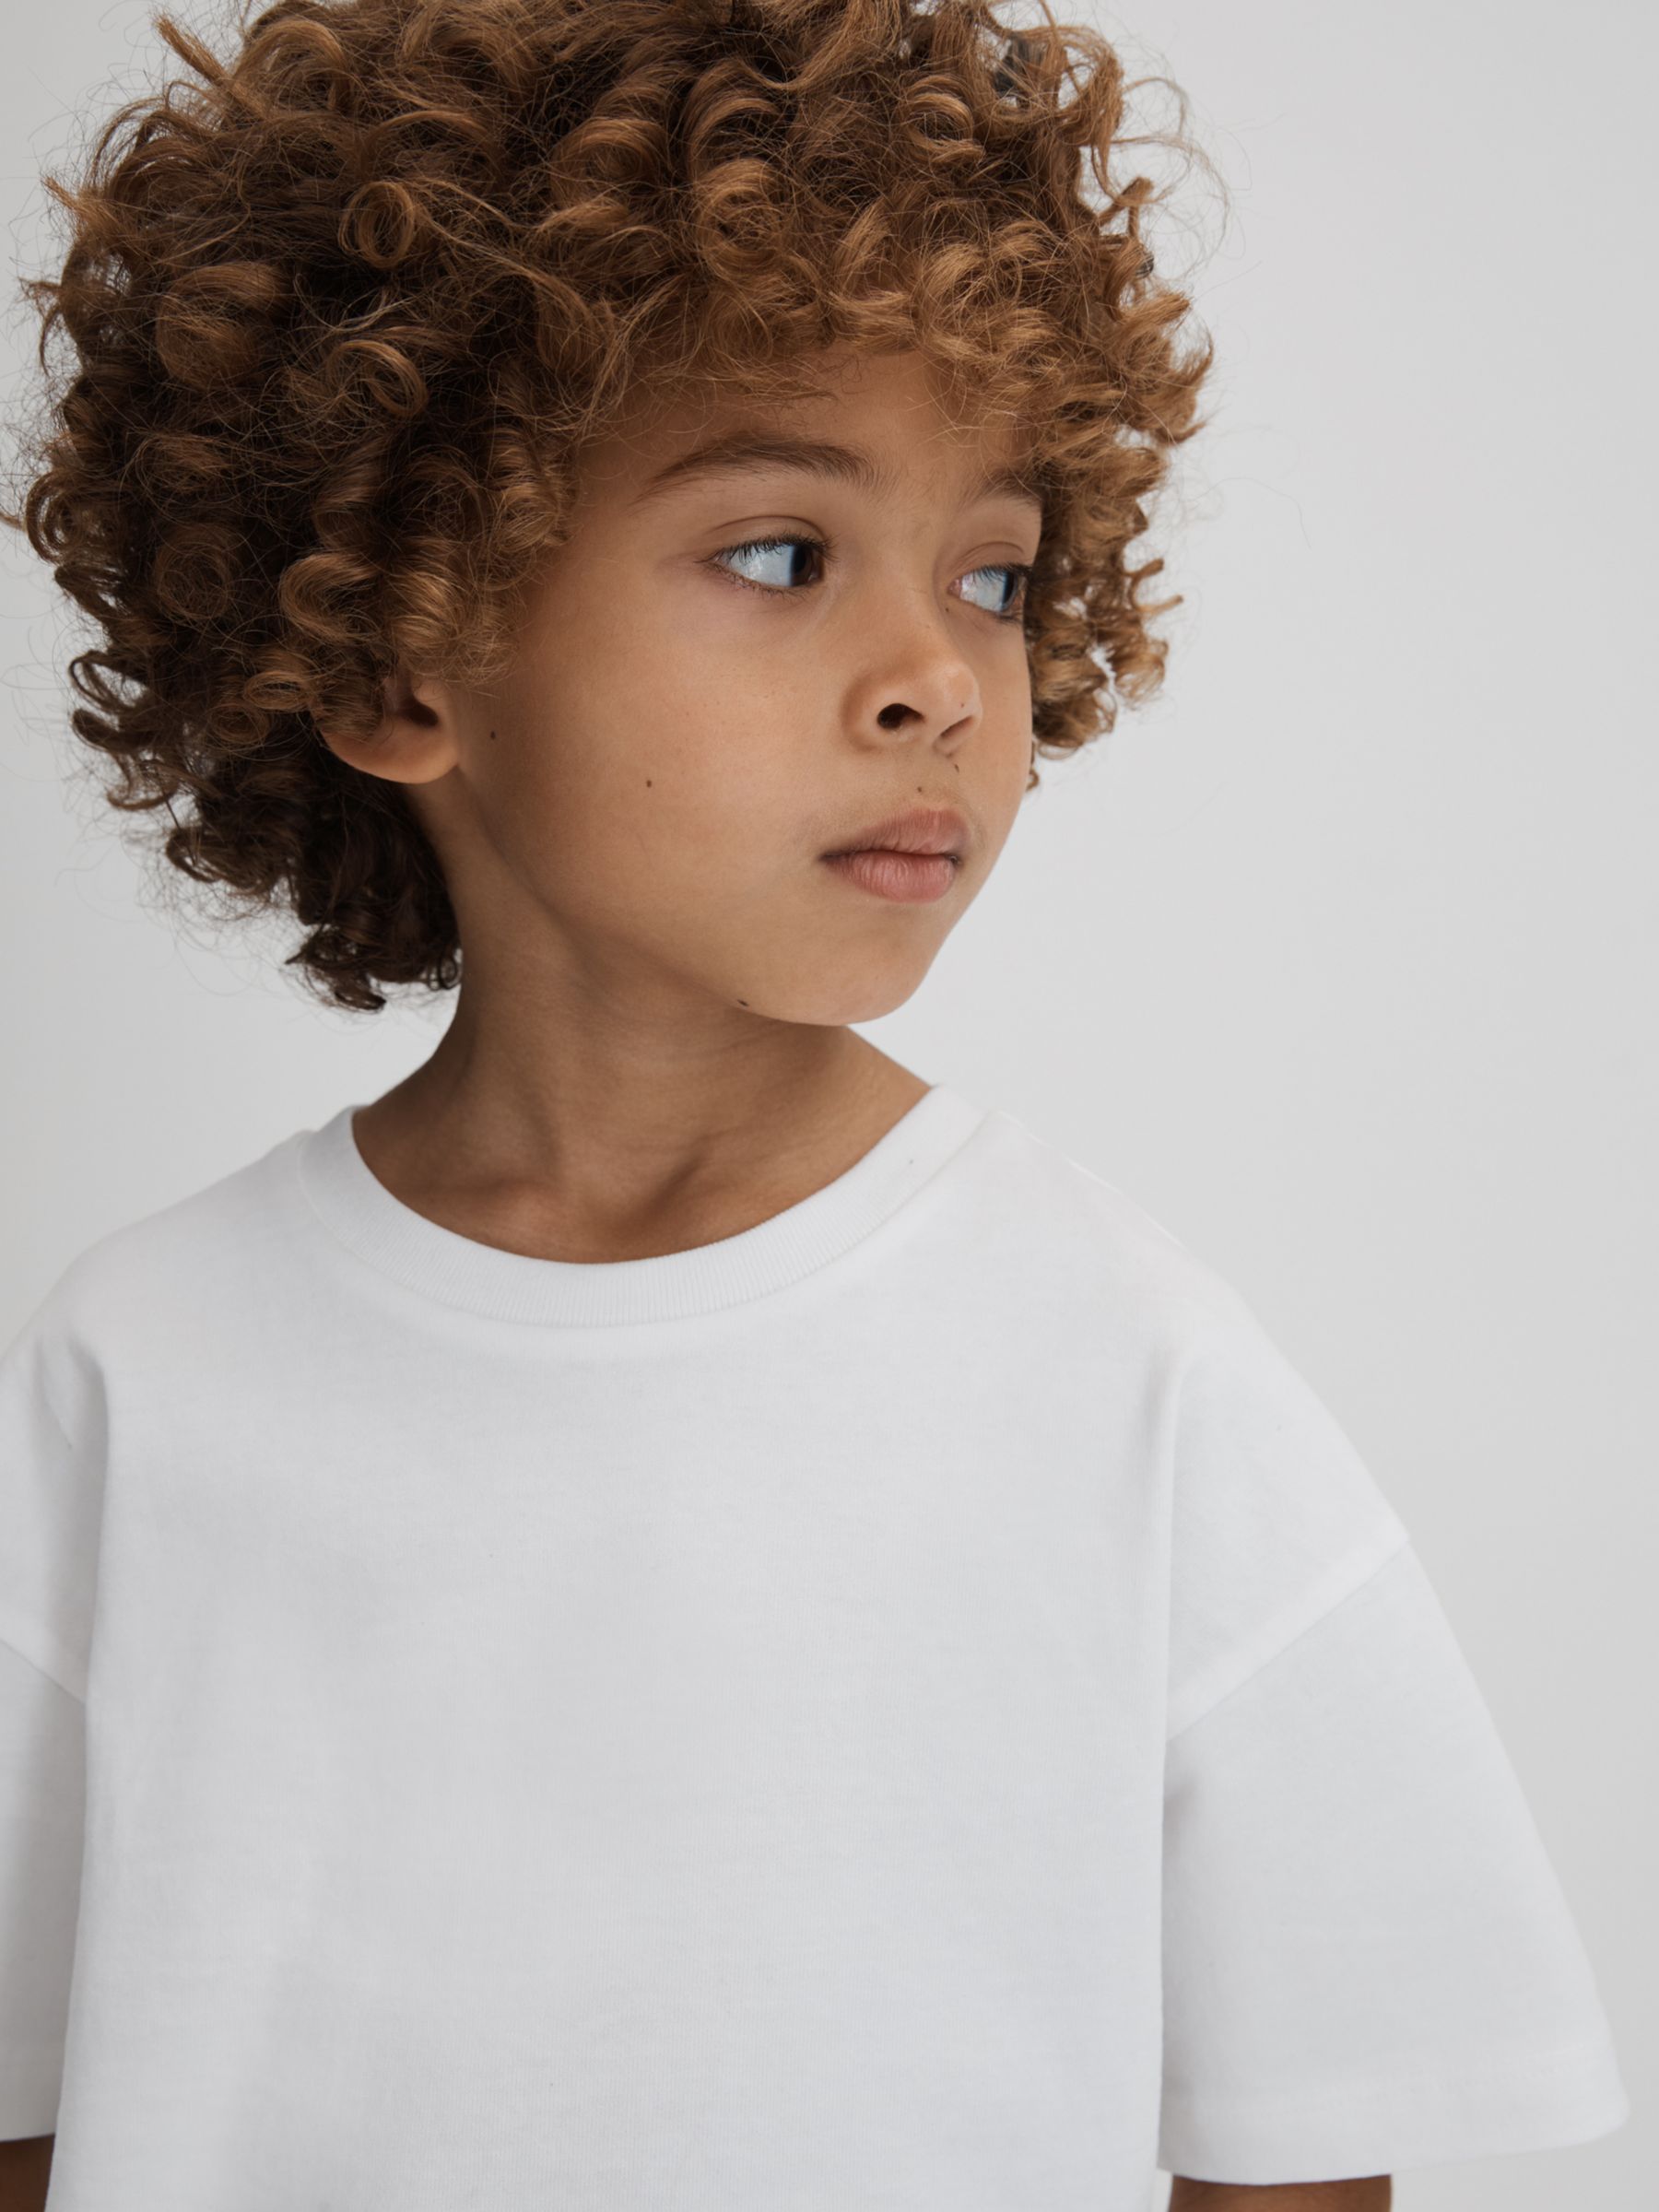 Reiss Kids' Selby Oversized Crew Neck T-Shirt, White, 5-6 years